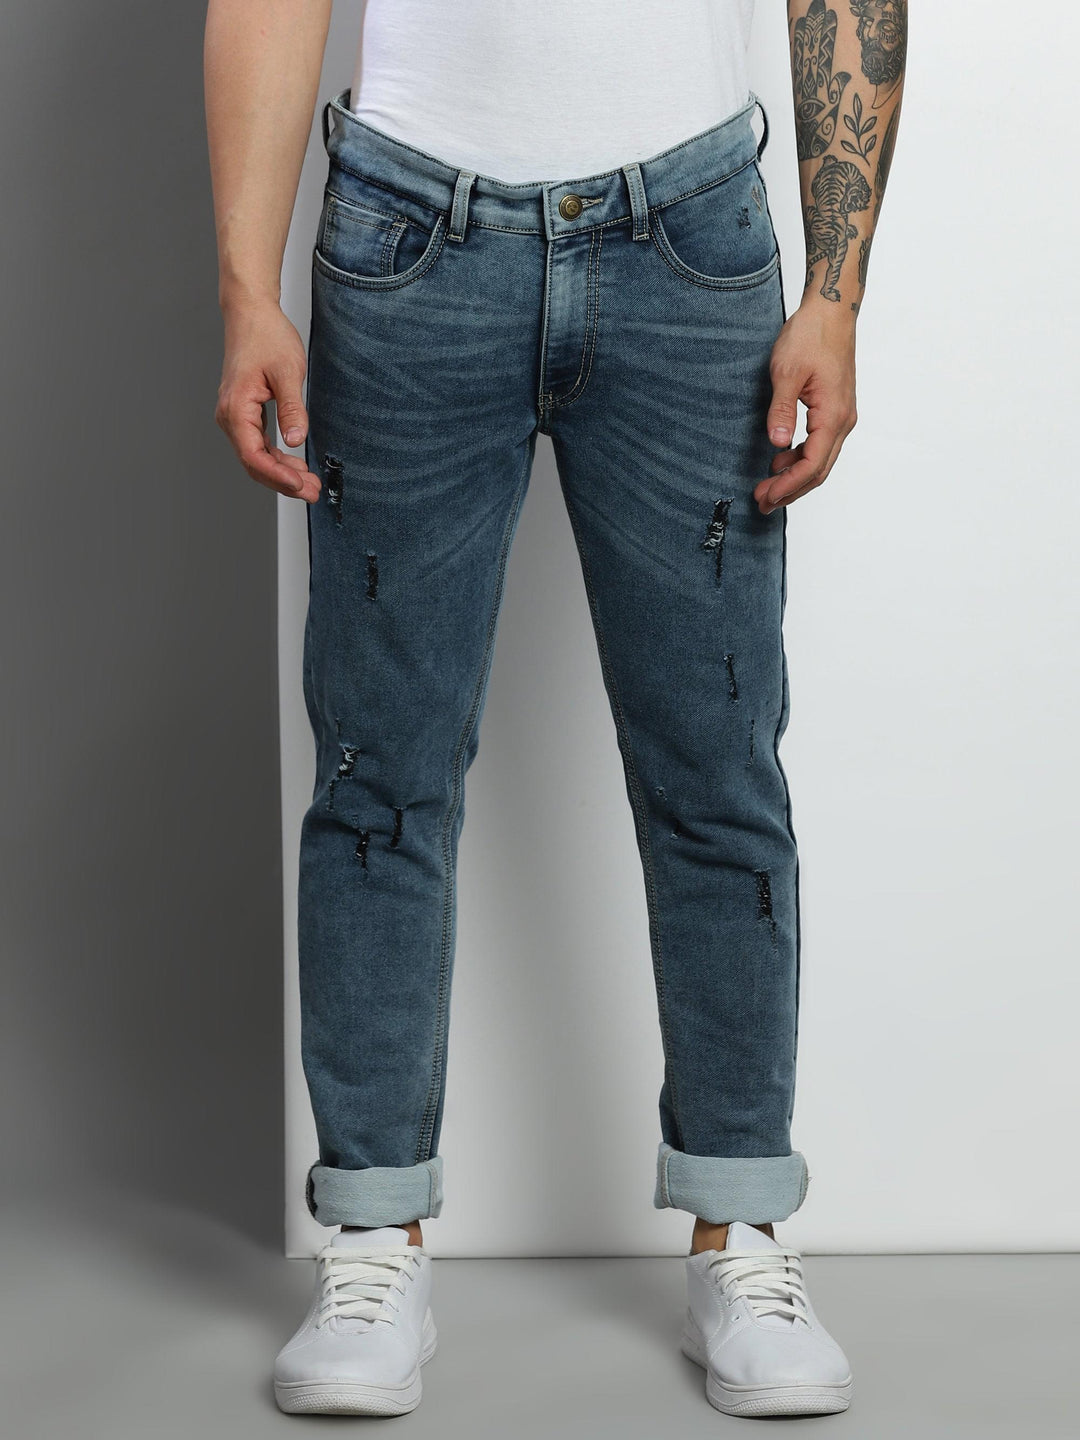 Torn Jeans For Men - Buy Trendy Torn Jeans For Mens Online – VUDU